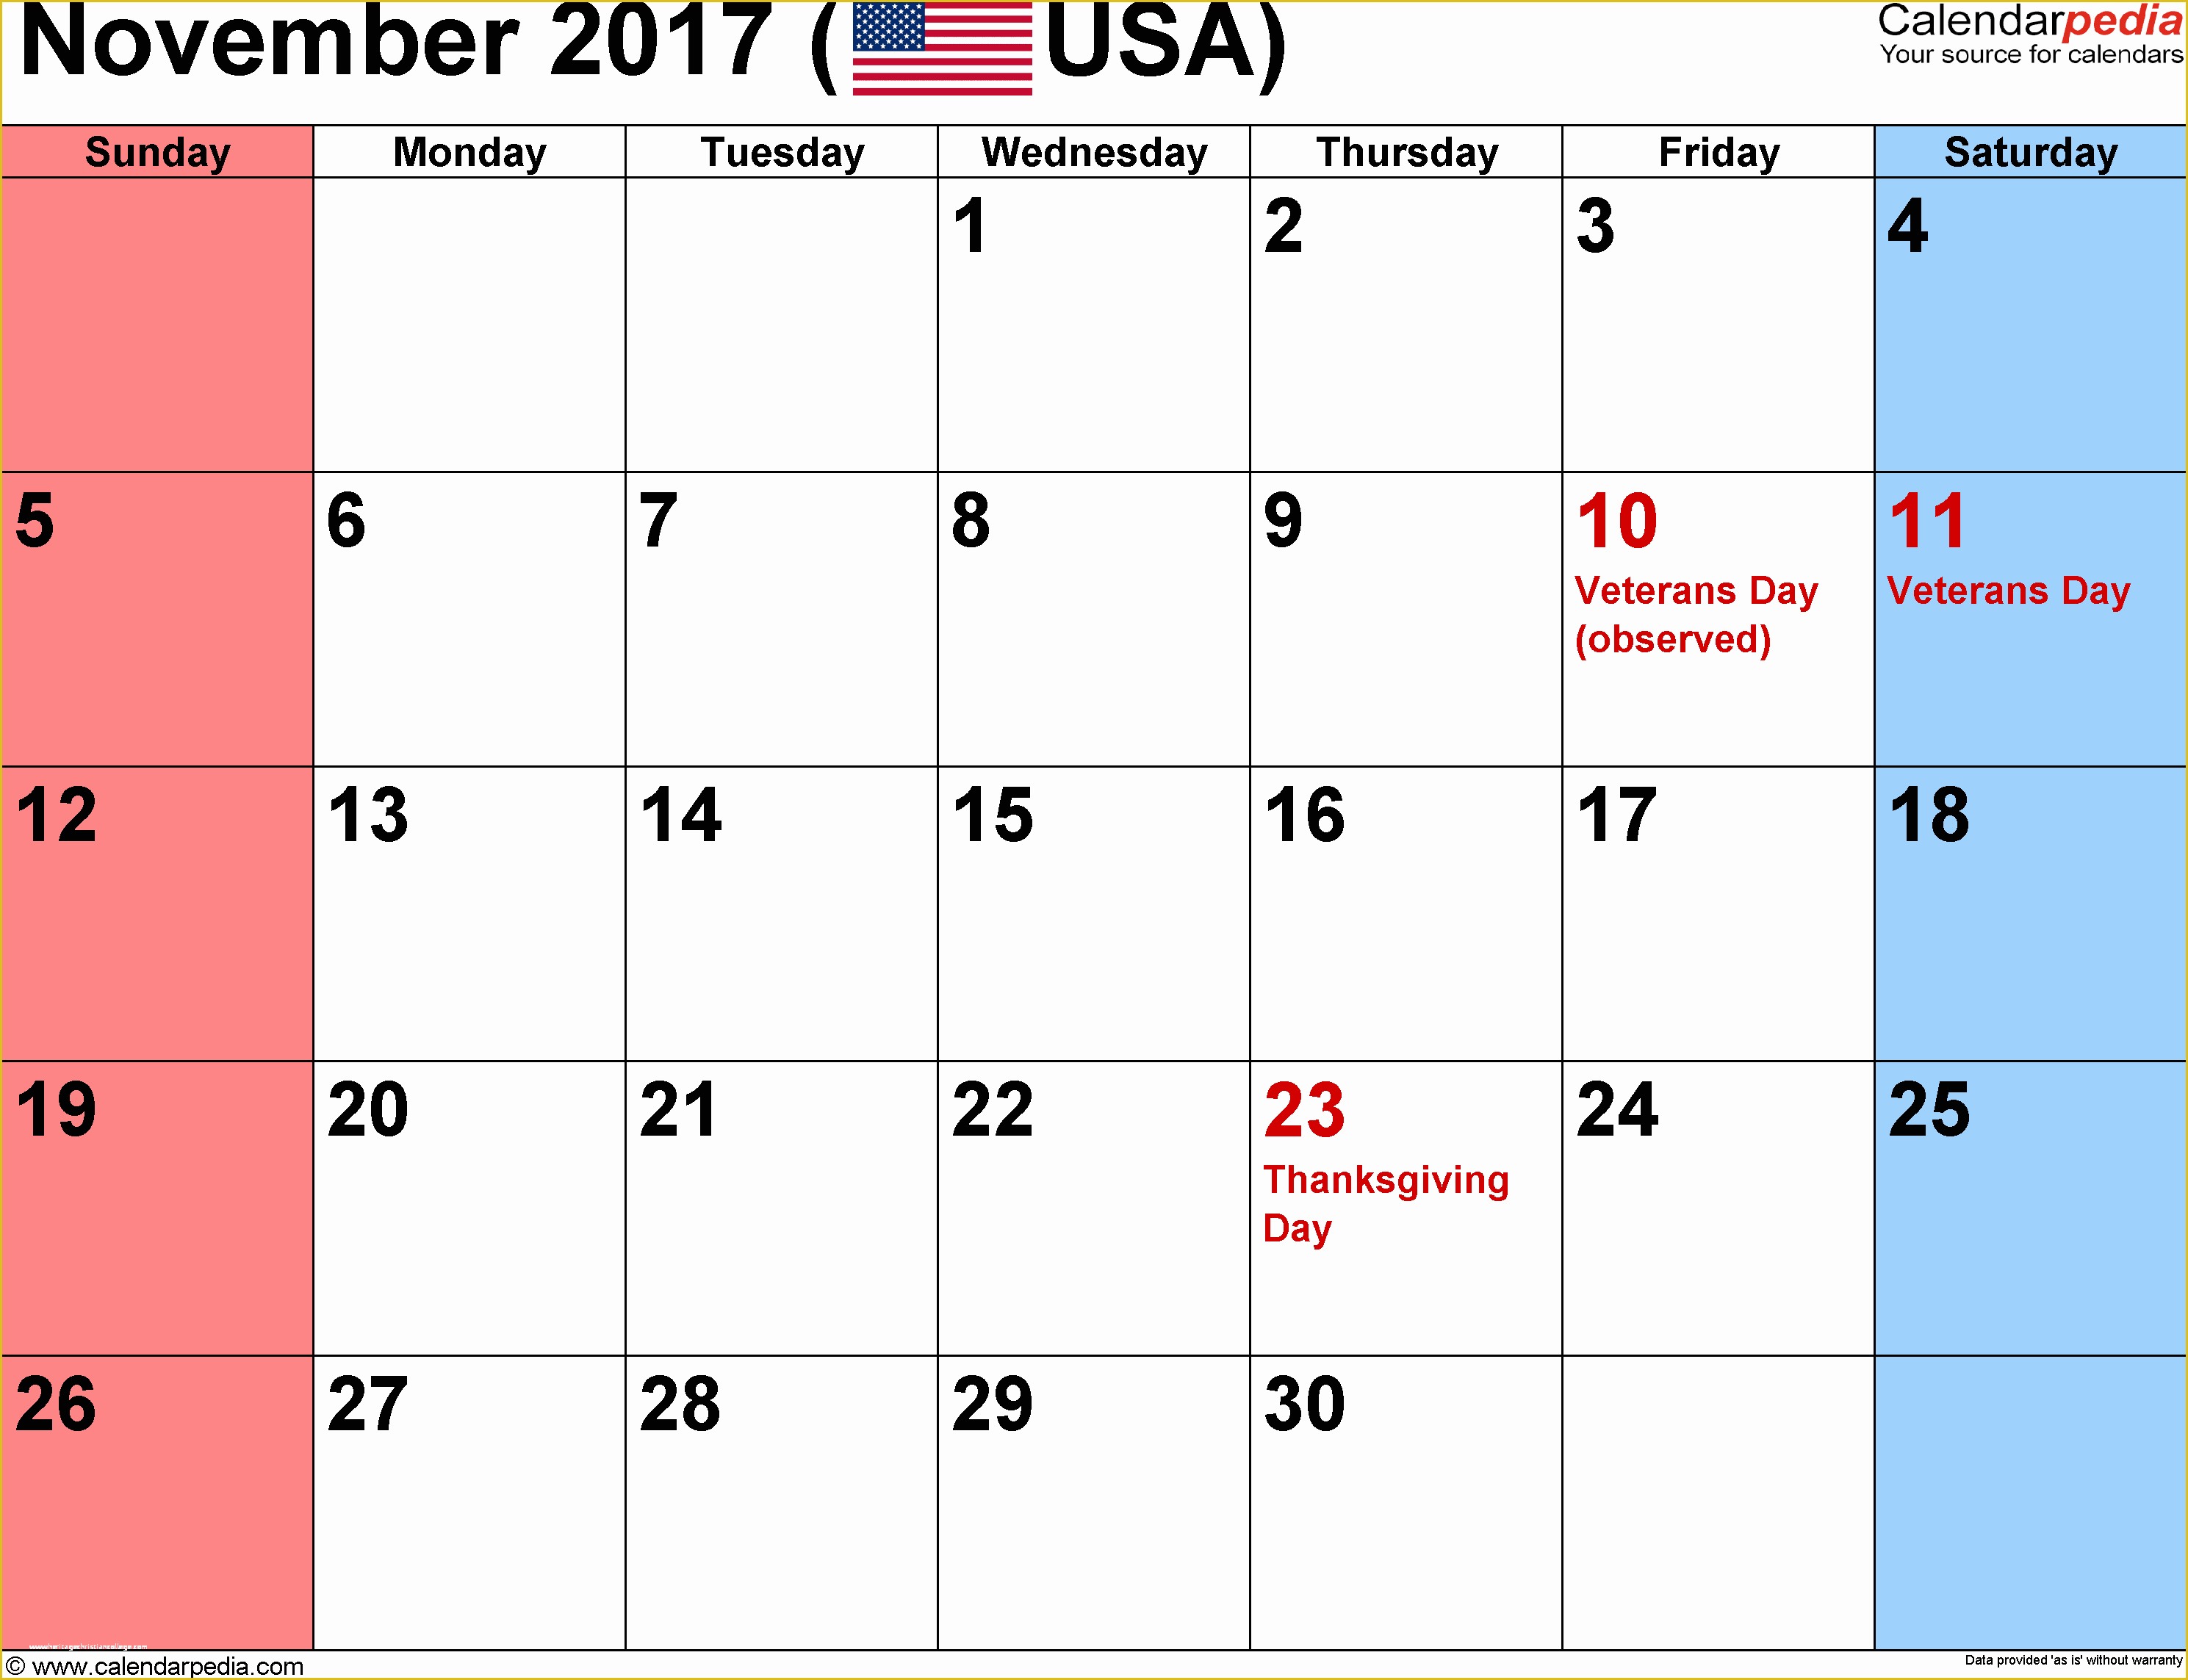 Free Calendar Template 2017 November Of November 2017 Calendars for Word Excel & Pdf